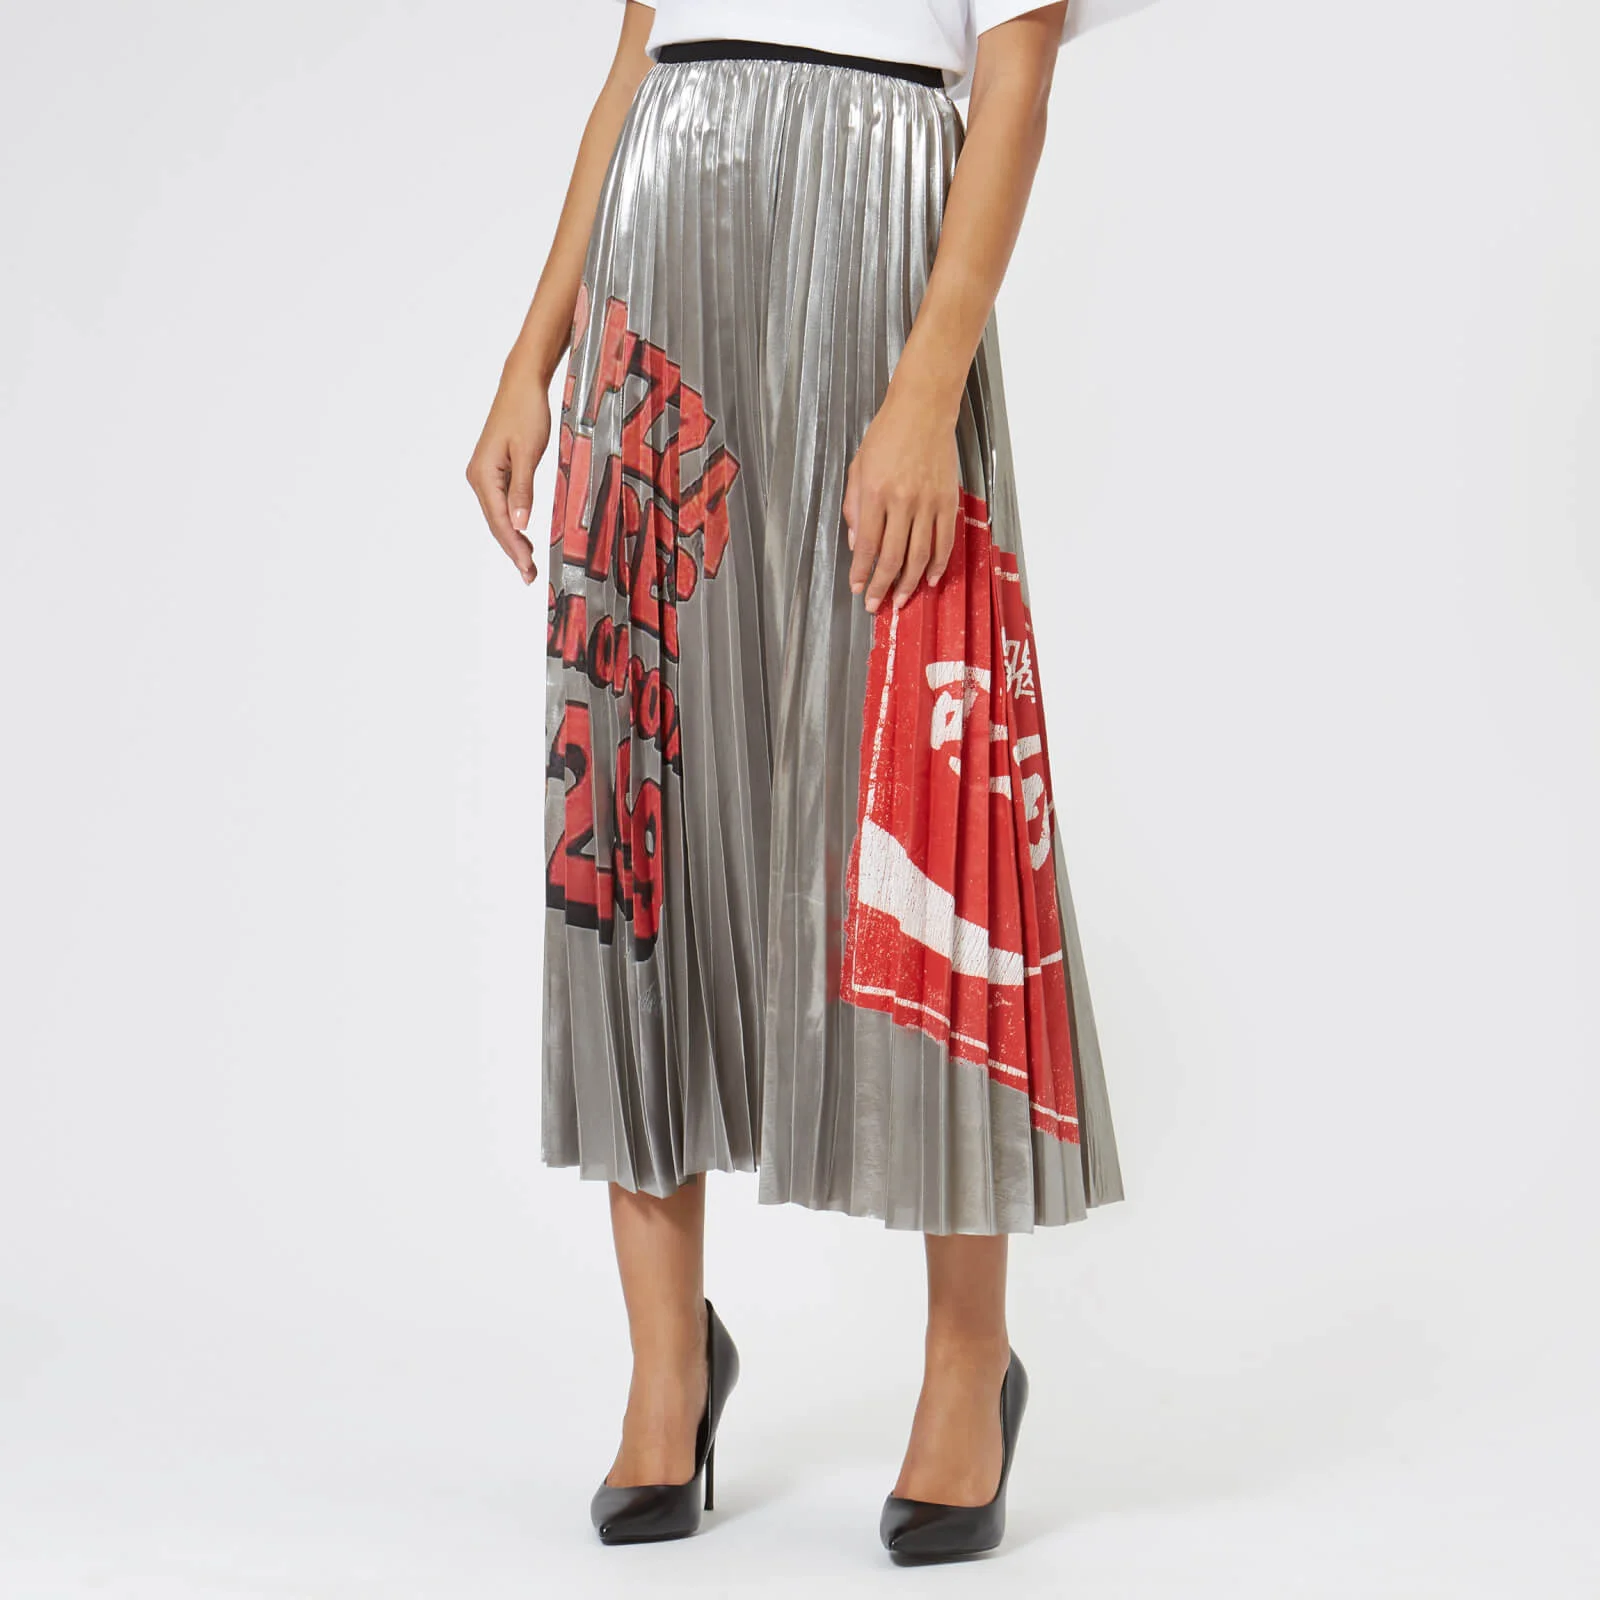 Marc Jacobs Women's Metallic Pleated Skirt - Silver Image 1